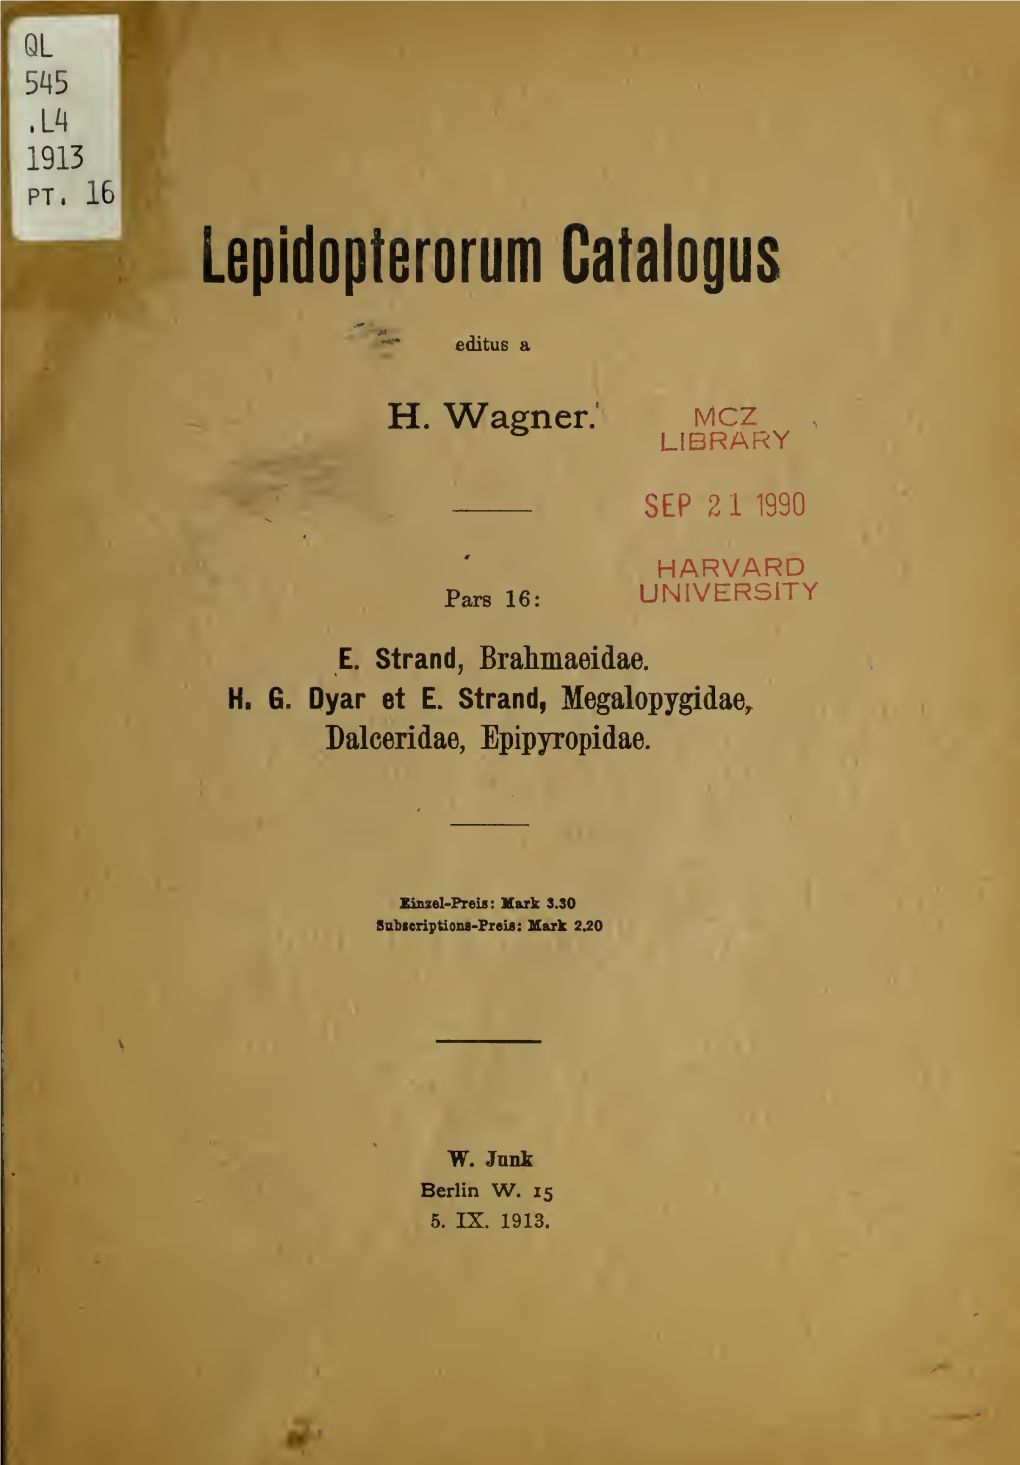 Lepidopterorum Catalogus